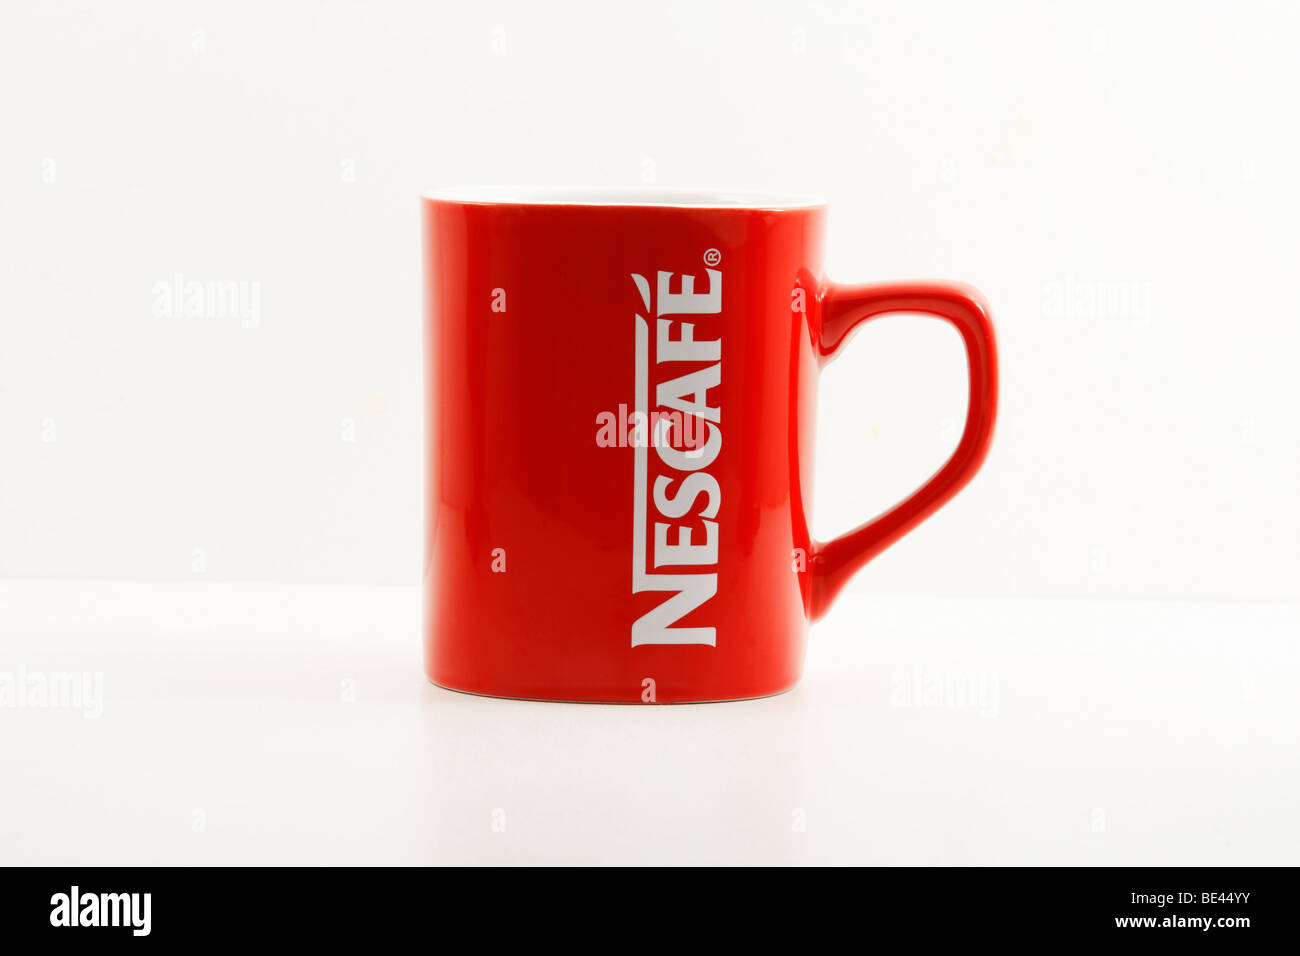 Nescafé Gold ice cream breaks new ground - Tea & Coffee Trade Journal